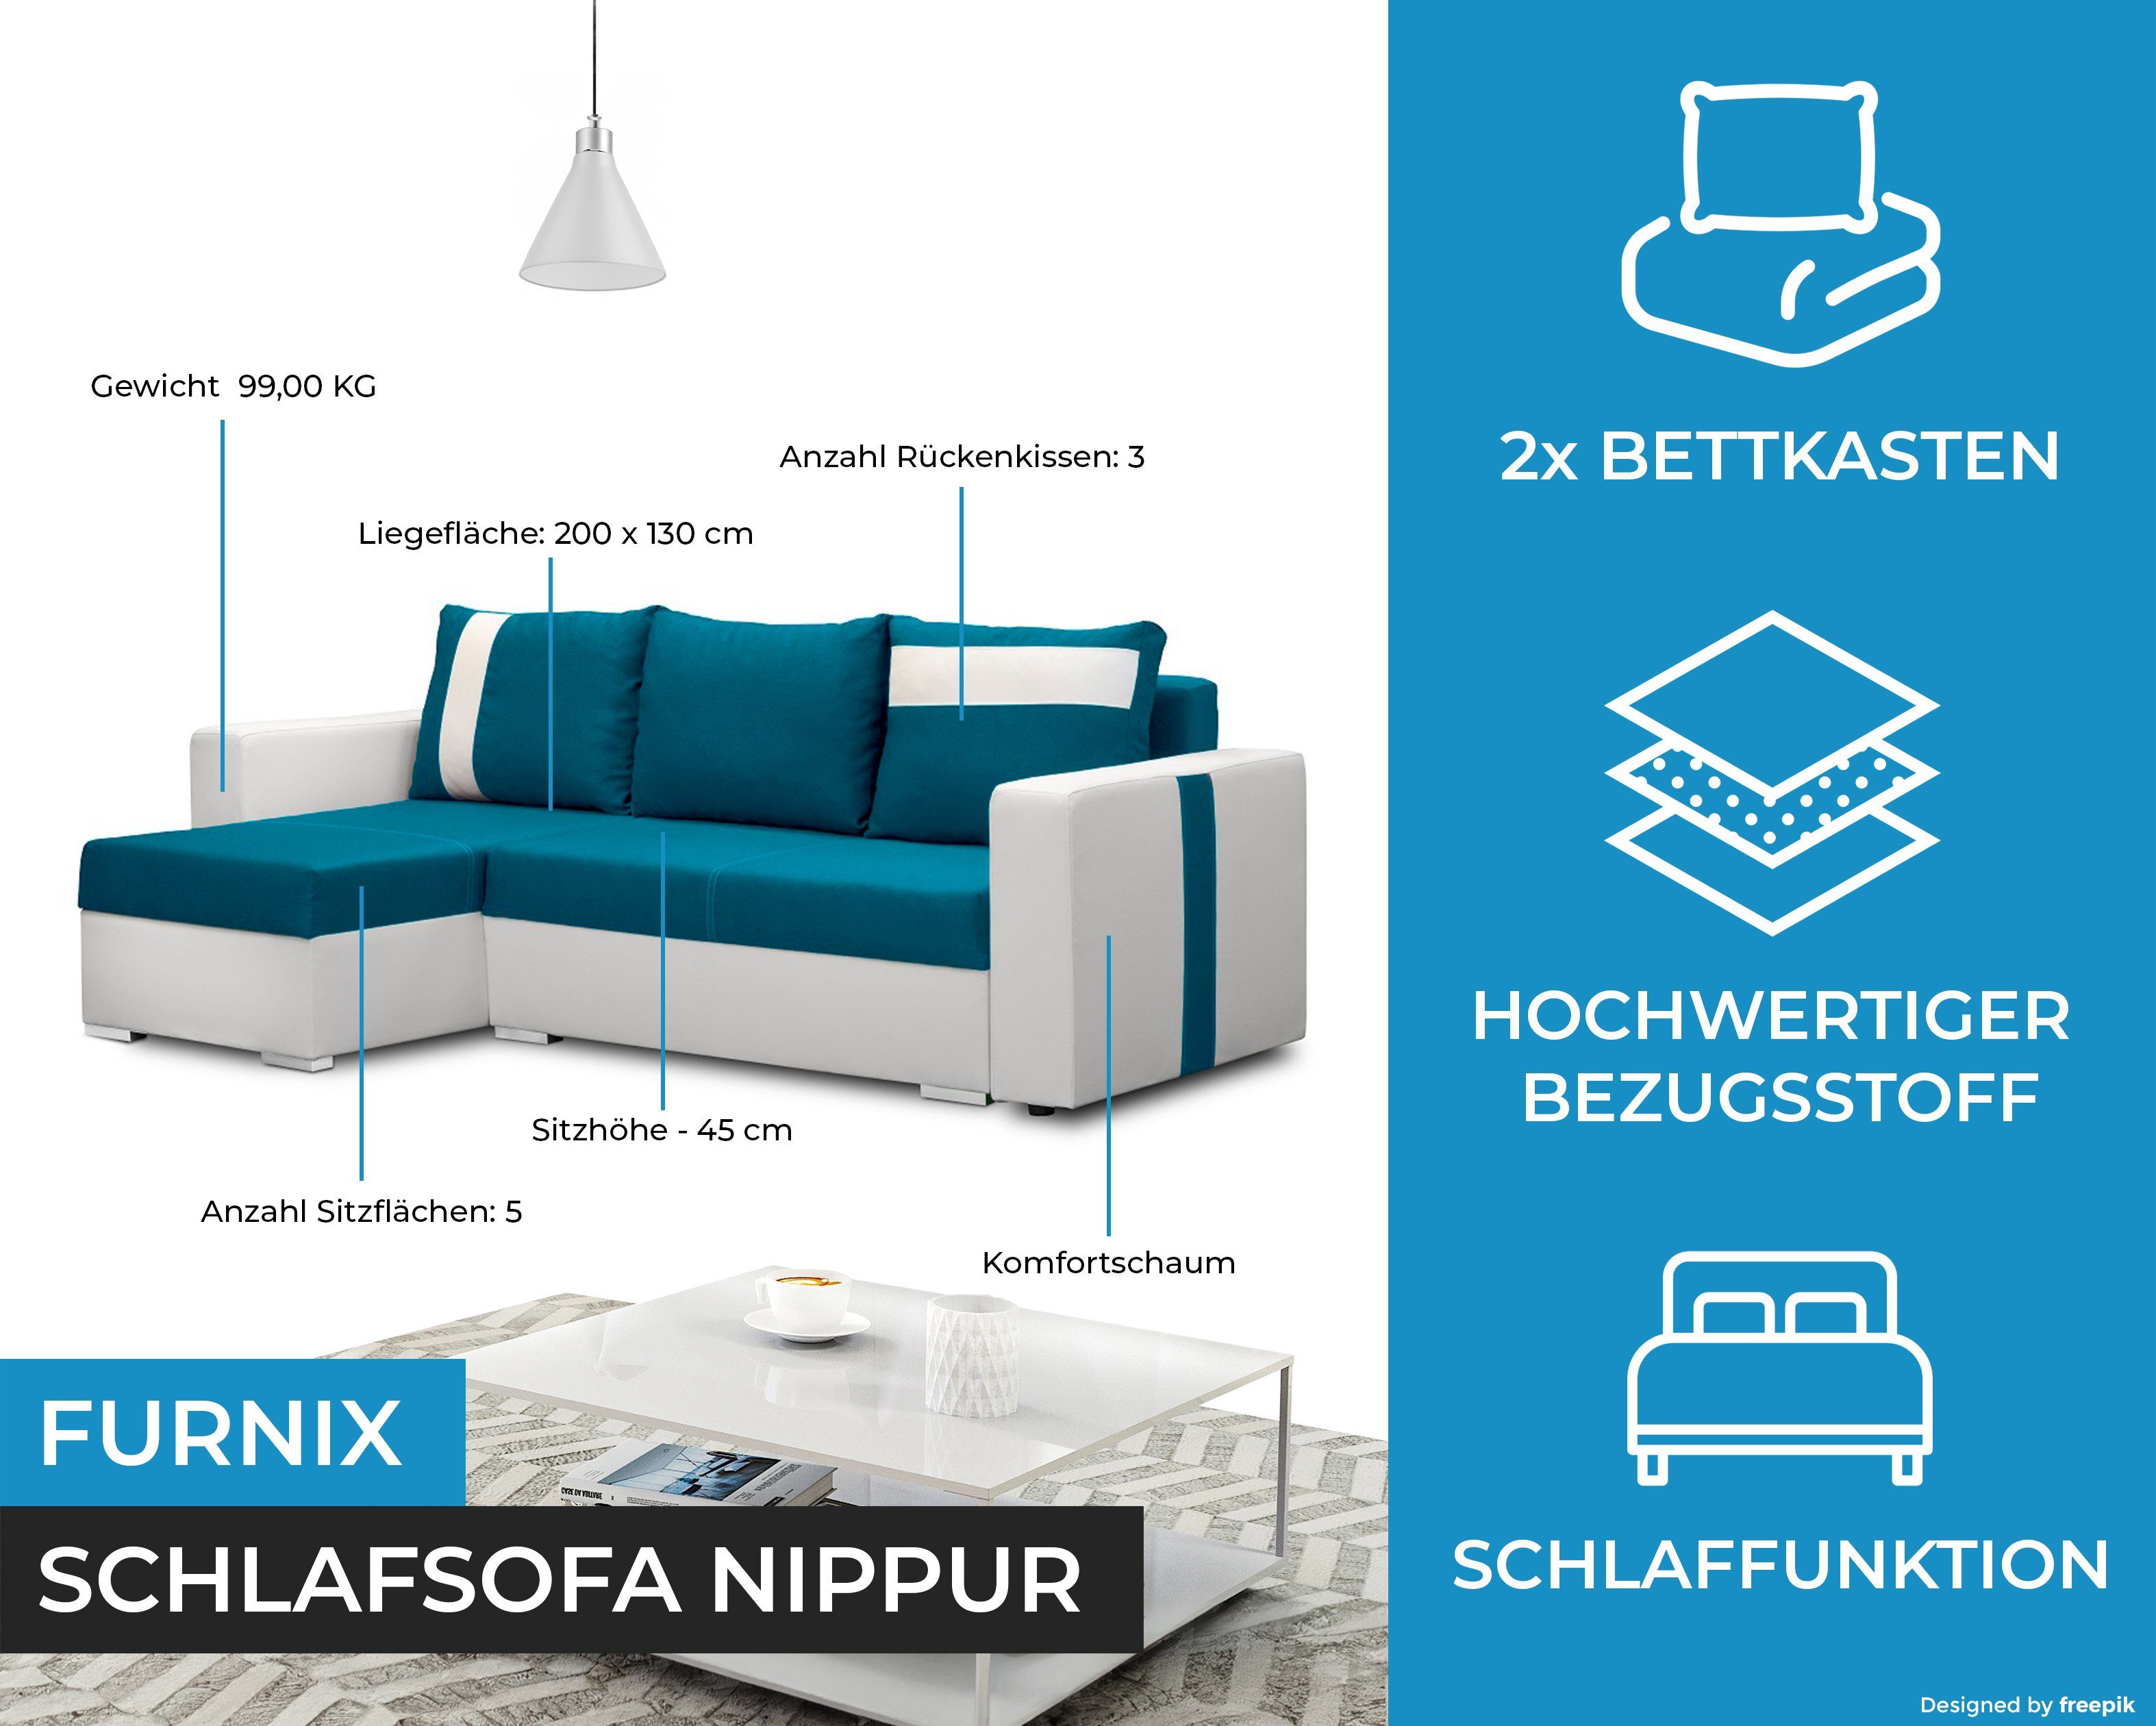 Furnix Schlafsofa NIPPUR Sofa Sitzhöhe: in Weiß/Blau B230 45 L-Form cm T145 Maße: cm, BH16+SF17 H90 mit Schlaffunktion, DL-Ausziehautomatik, Polstercouch Bettkasten, 2x x x